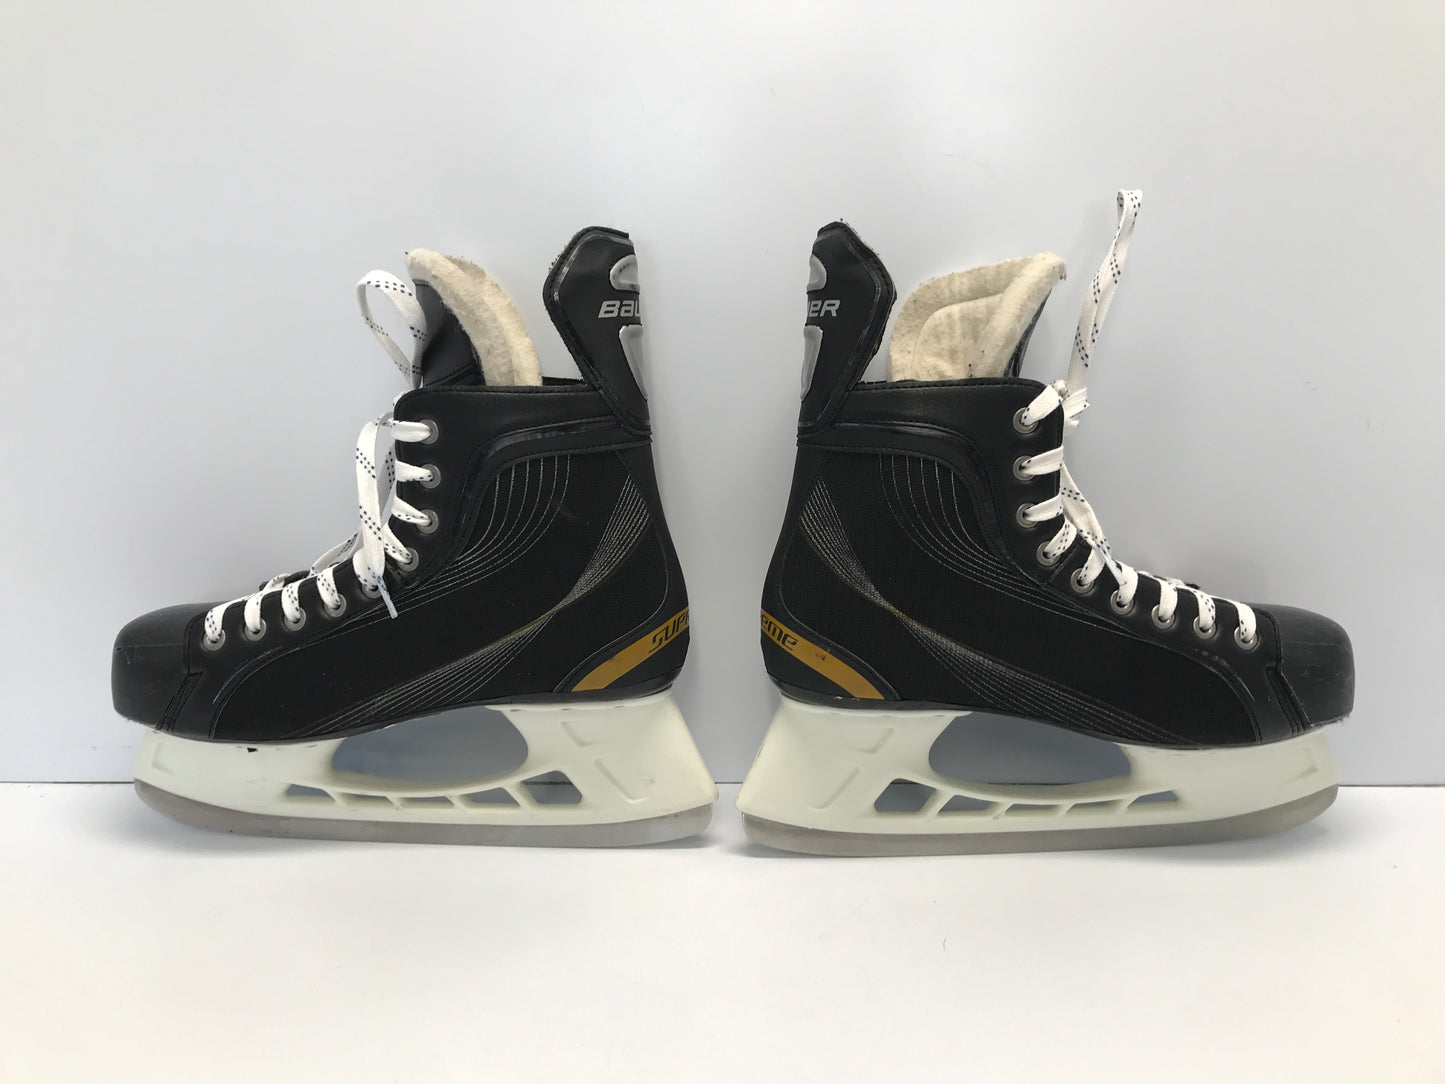 Hockey Skates Men's Size 11.5 Shoe and 10 Skate Size Bauer Supreme Like New